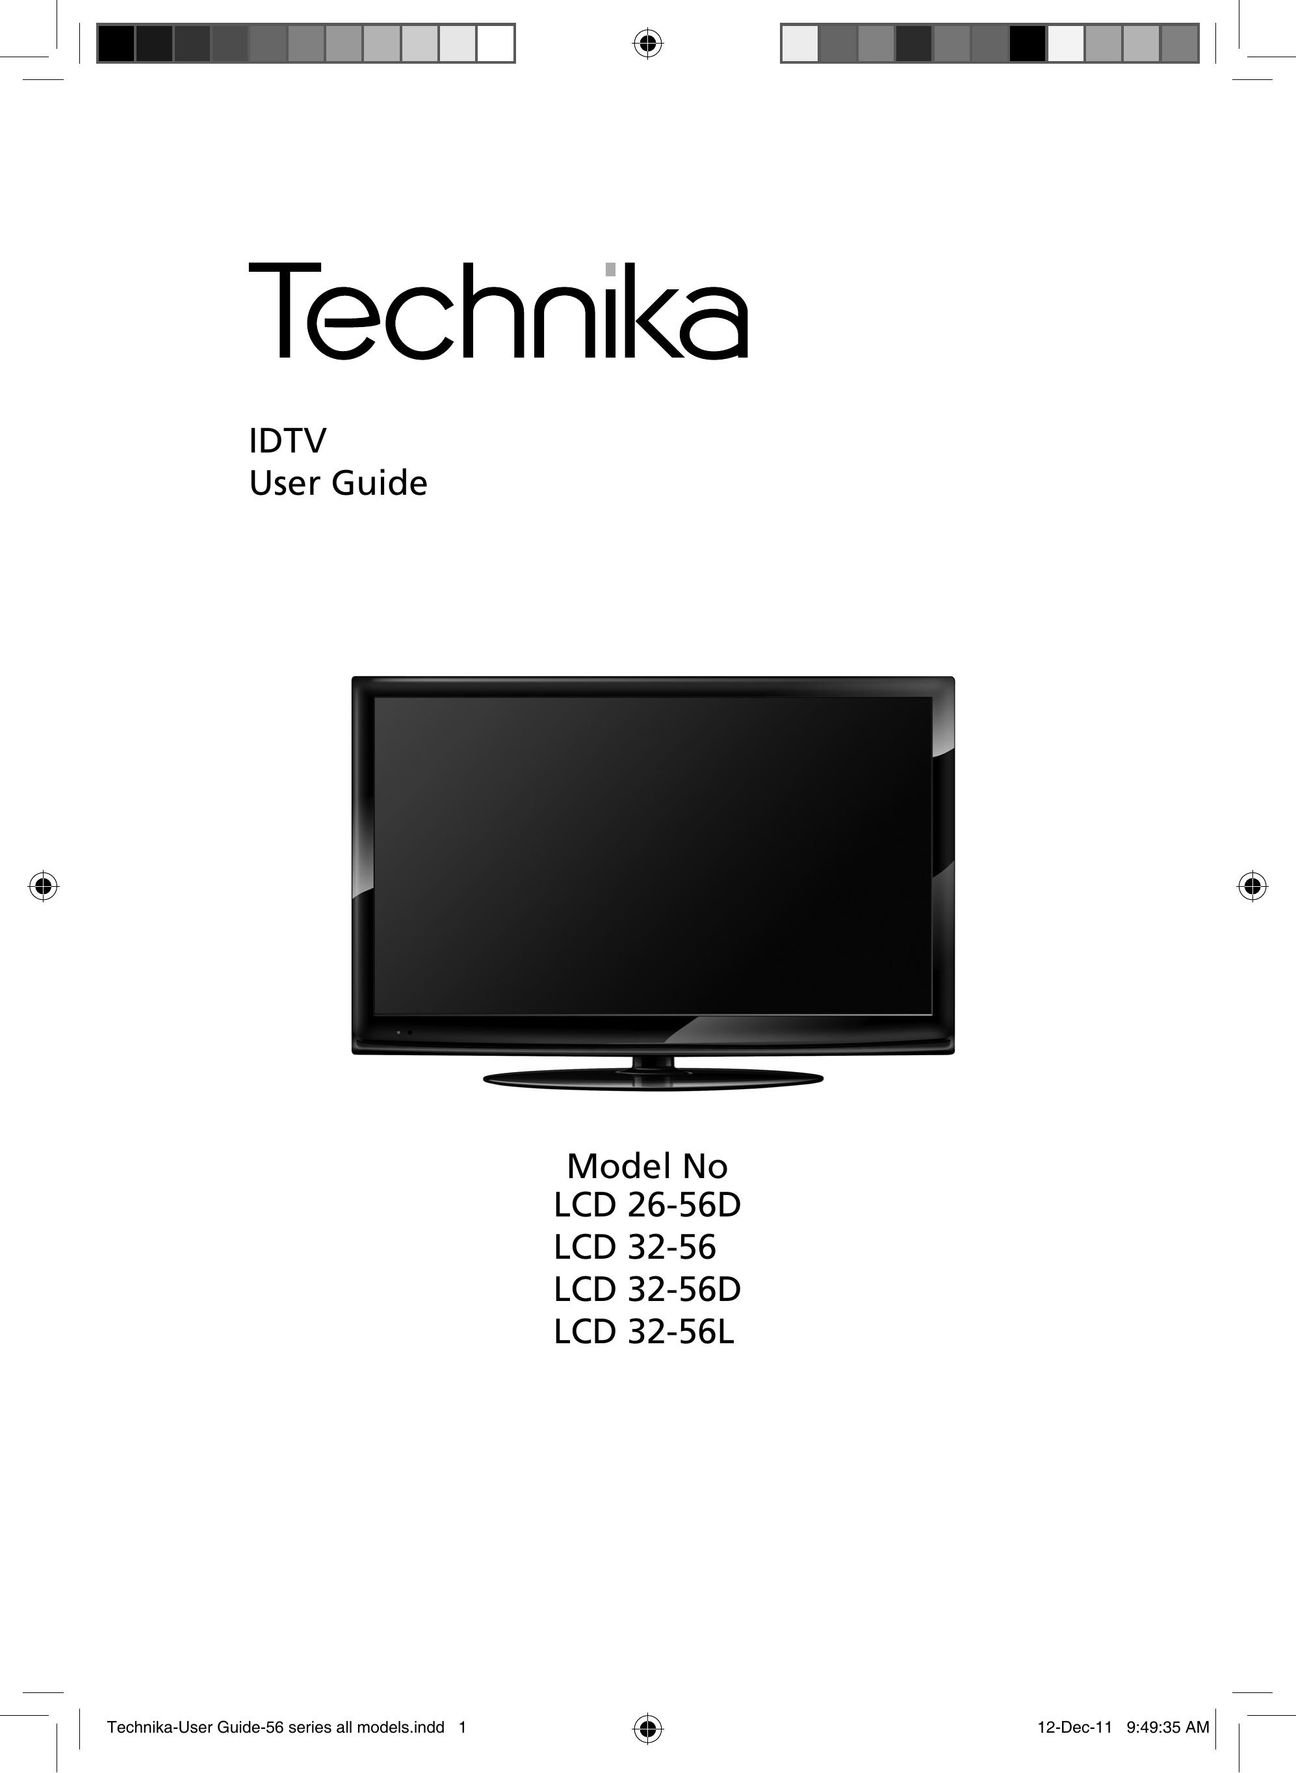 Technika LCD 26-56D Flat Panel Television User Manual